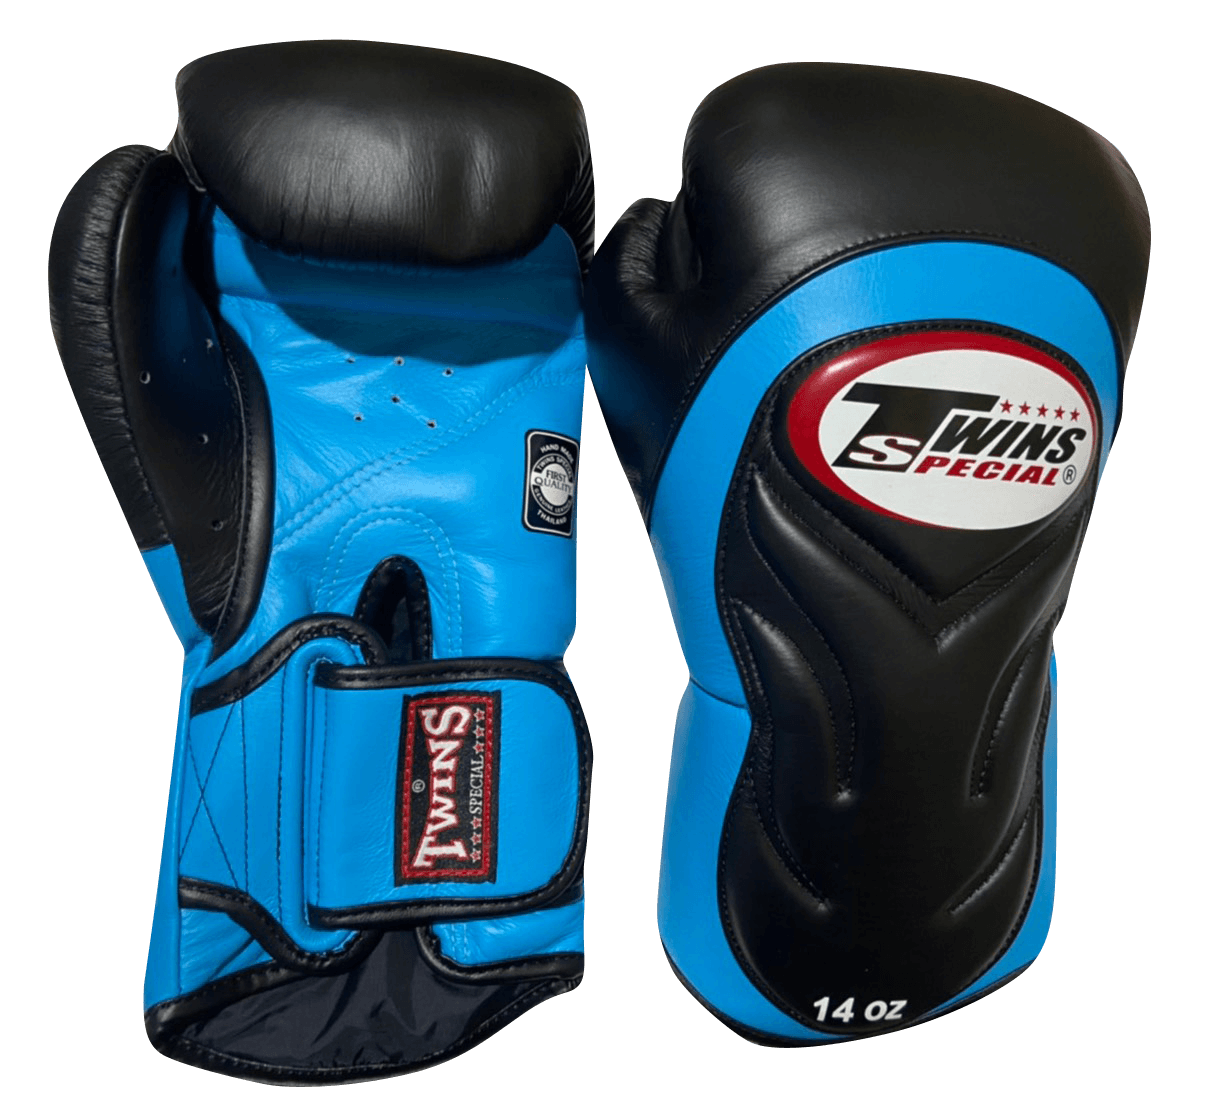 Twins Special Boxing Gloves BGVL6 Light Blue/Black - SUPER EXPORT SHOP